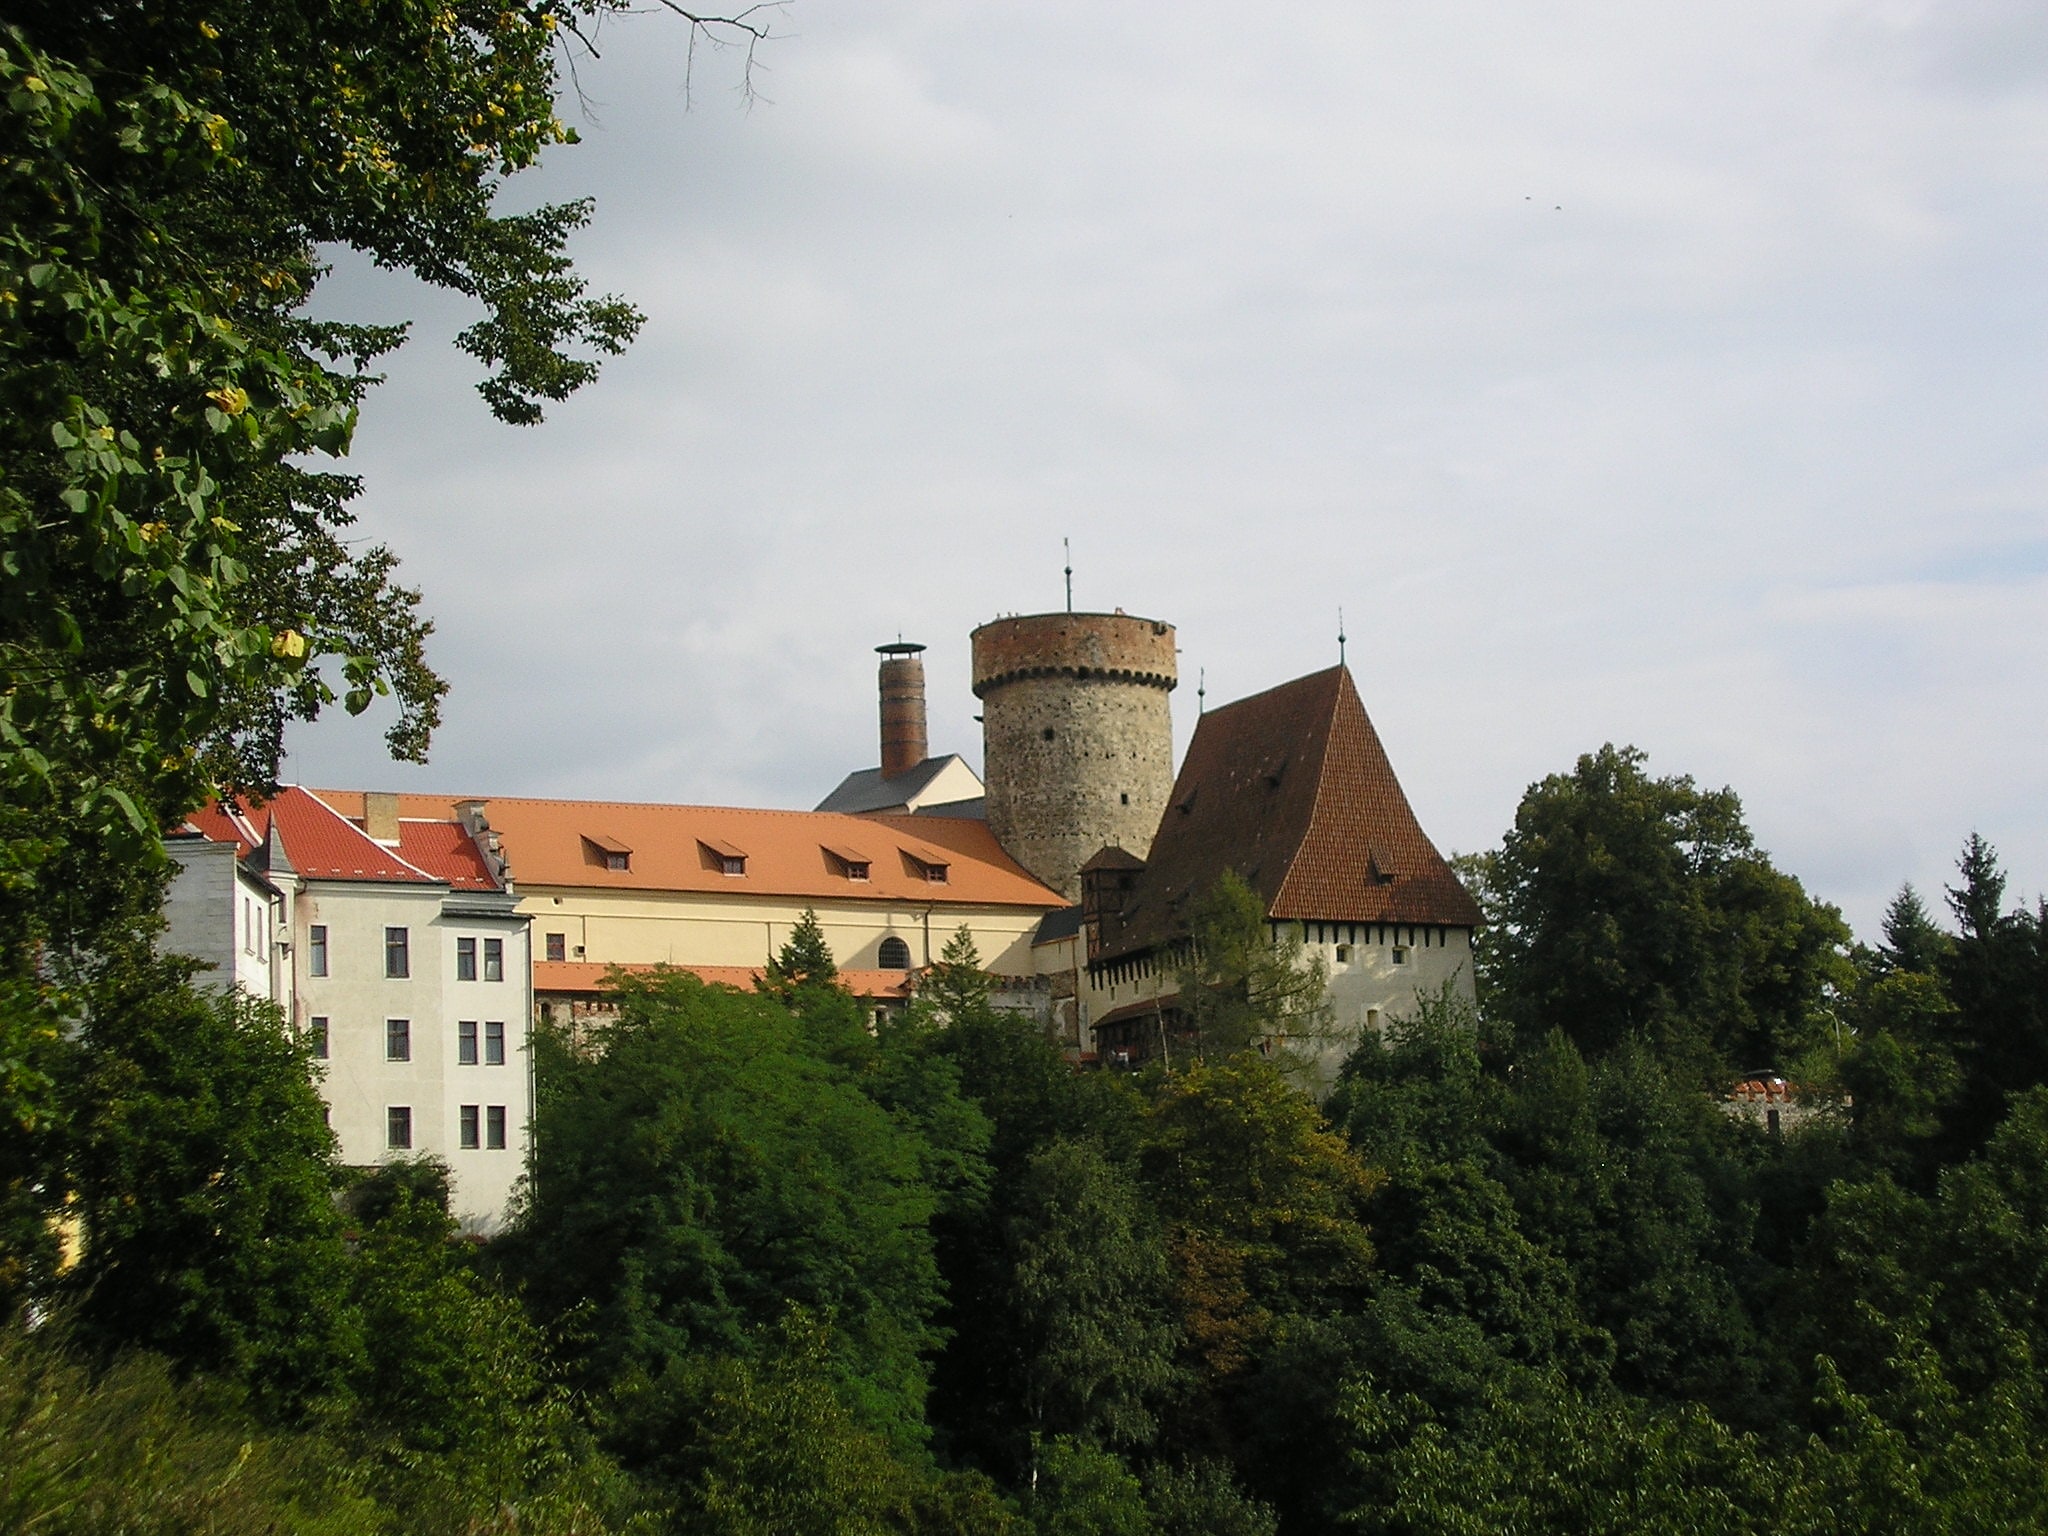 Tábor, Czech Republic